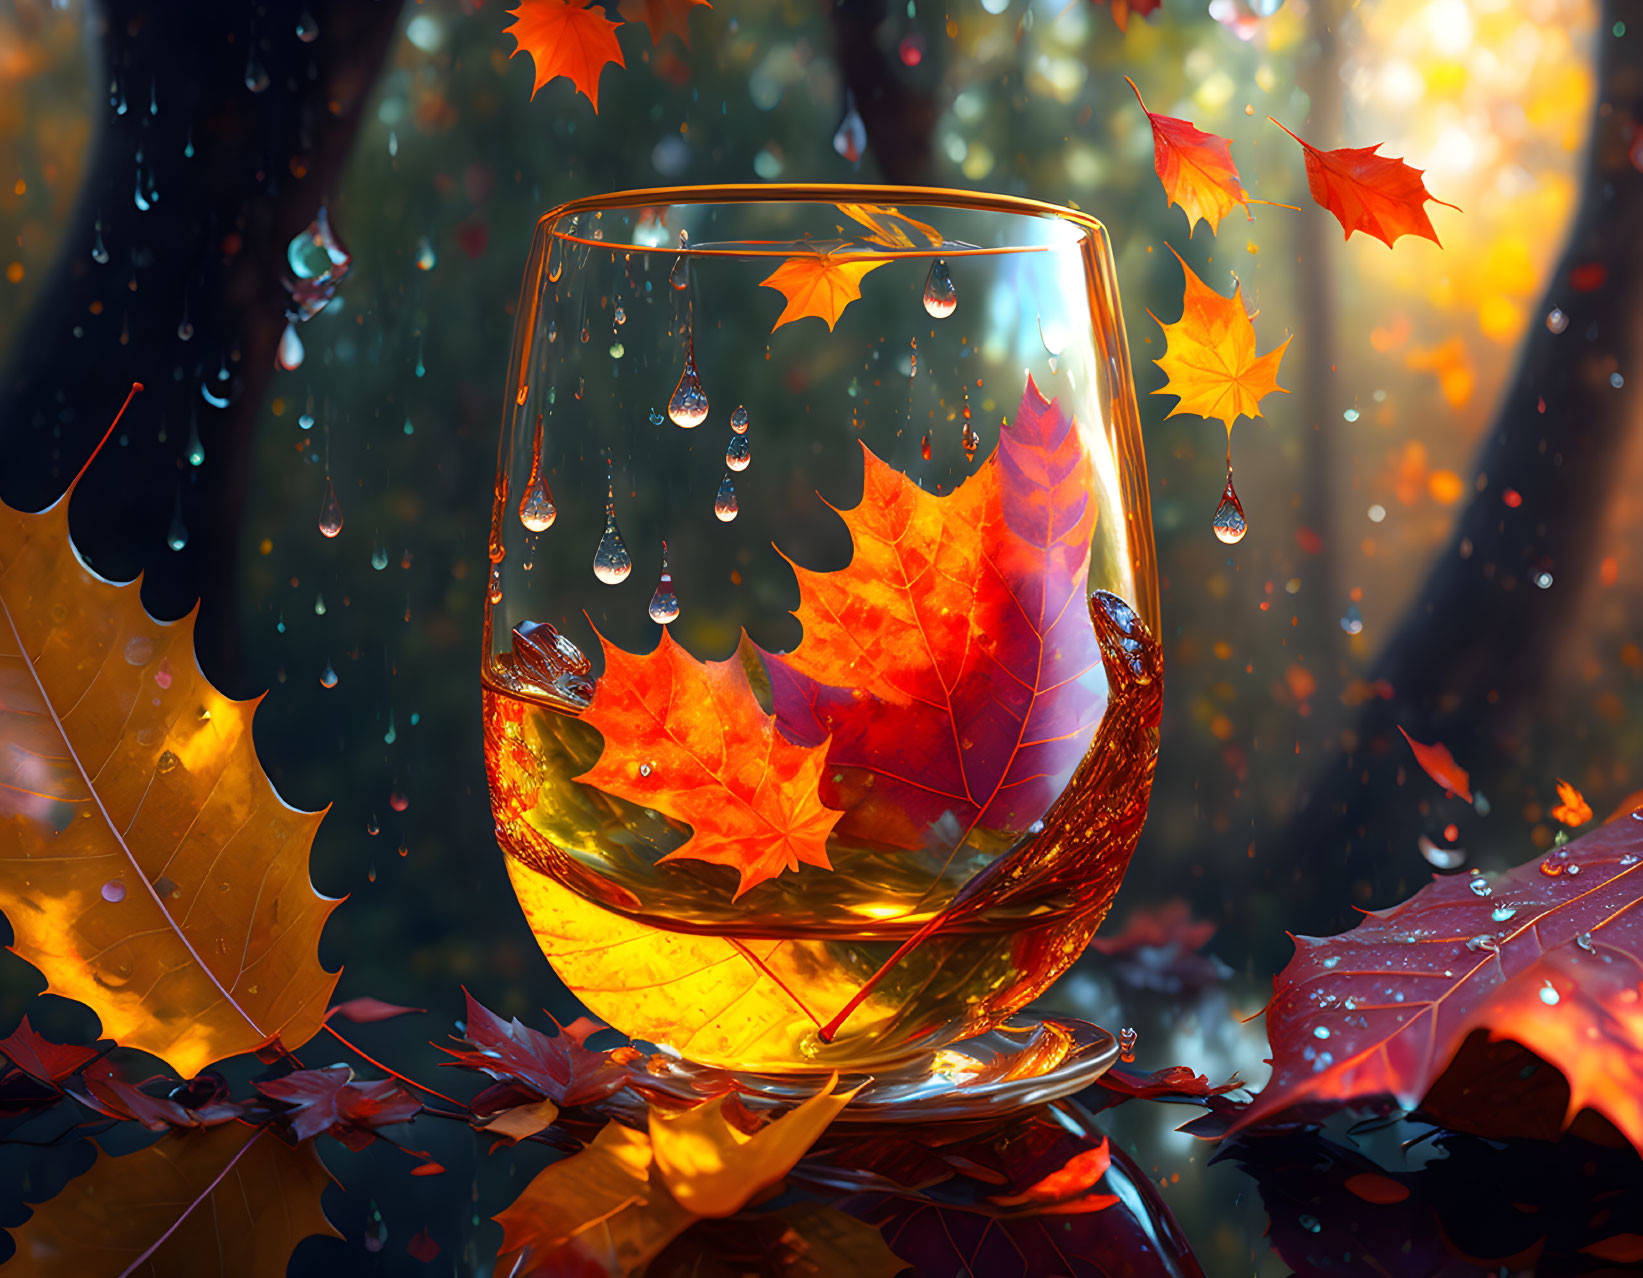 Autumn weather inside a glass tea cup